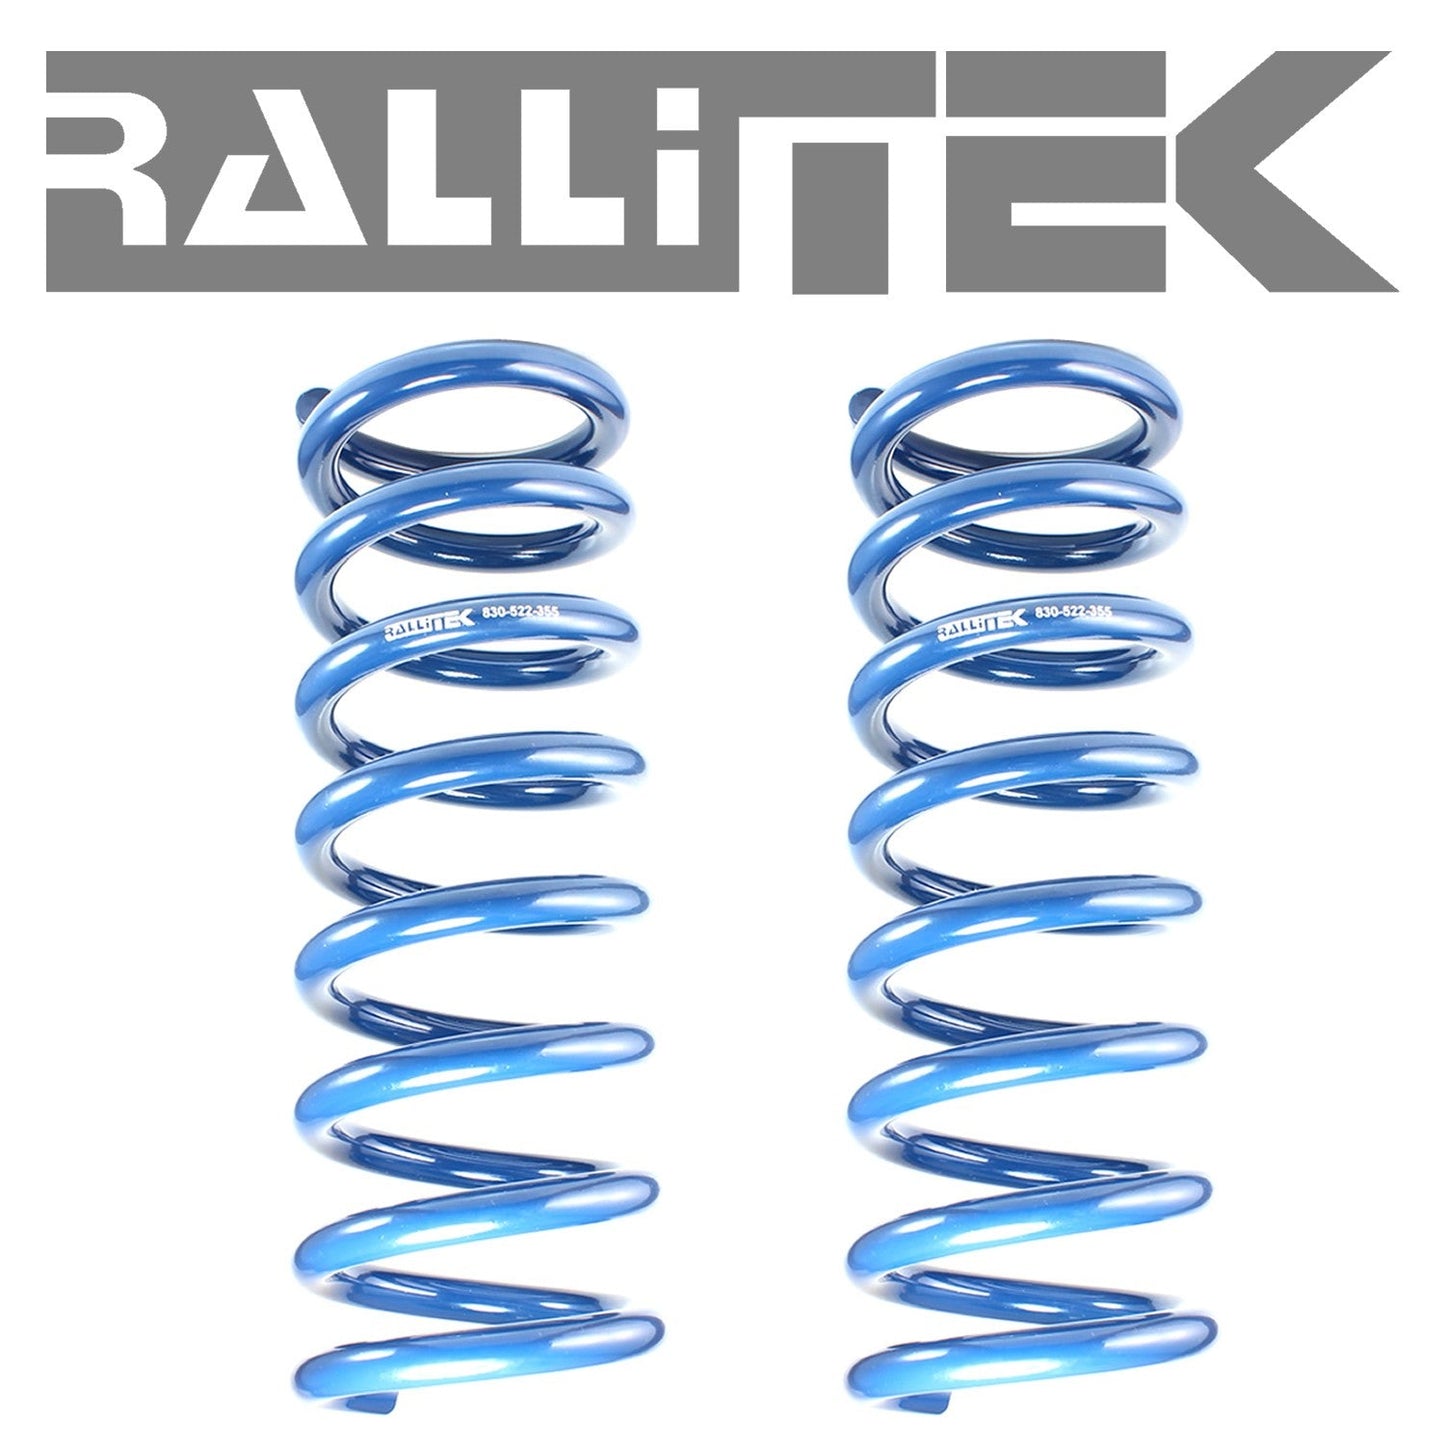 RalliTEK 0.75" Rear Springs & Bilstein B4 Struts Assembled - Outback 2015-2019